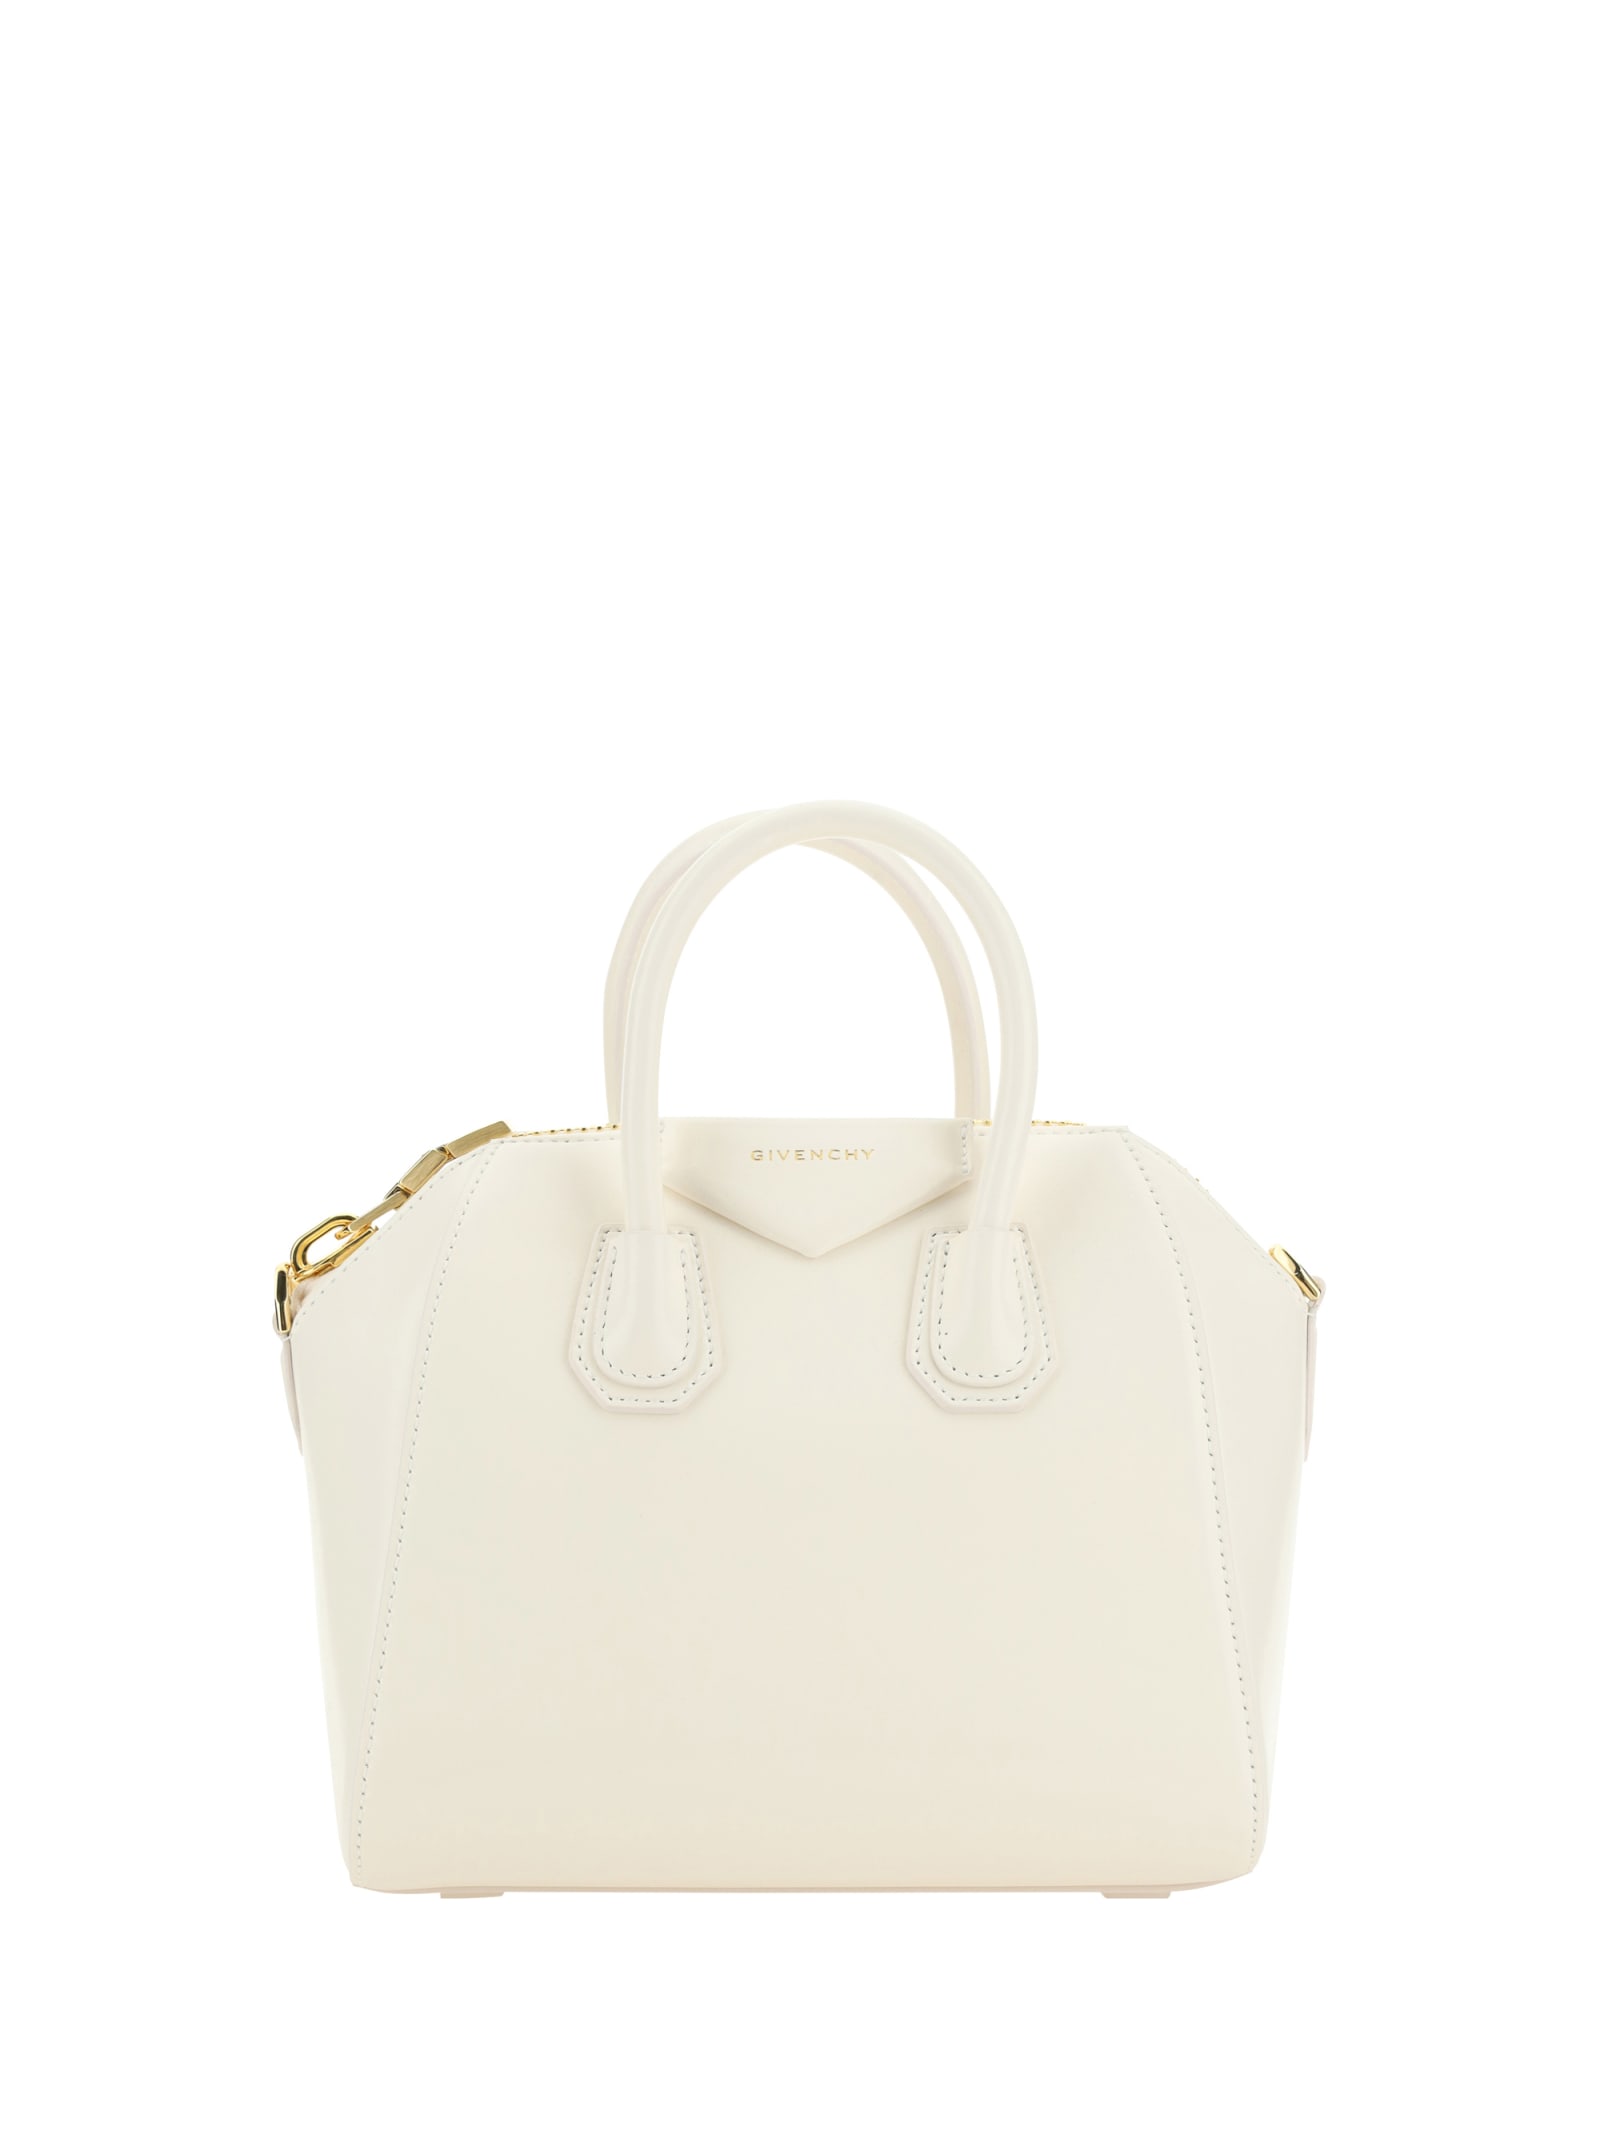 Givenchy Mini Antigona Handbag In White